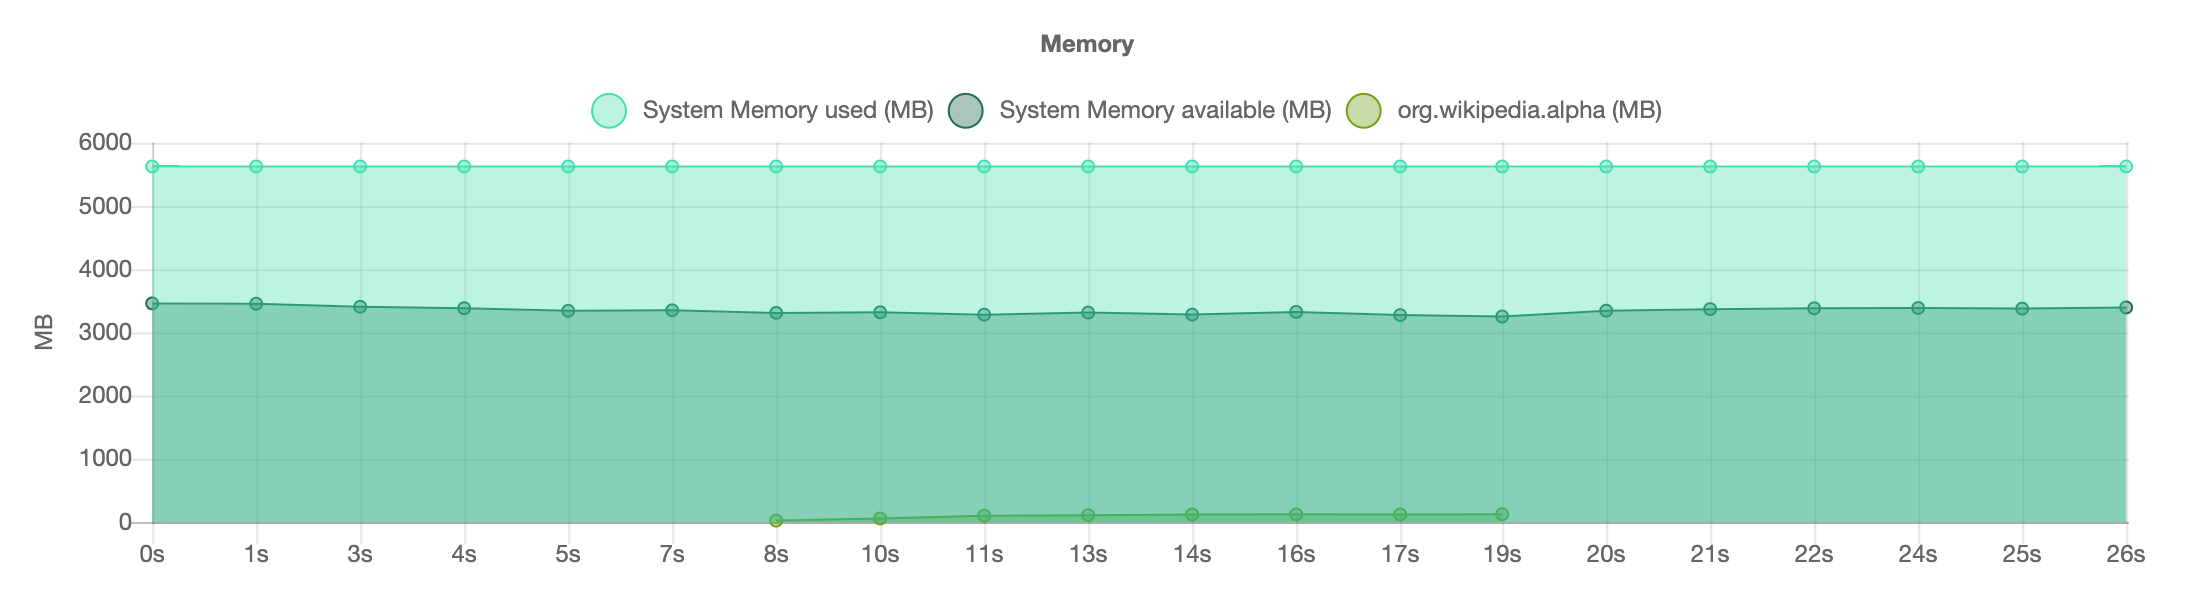 Memory usage graph